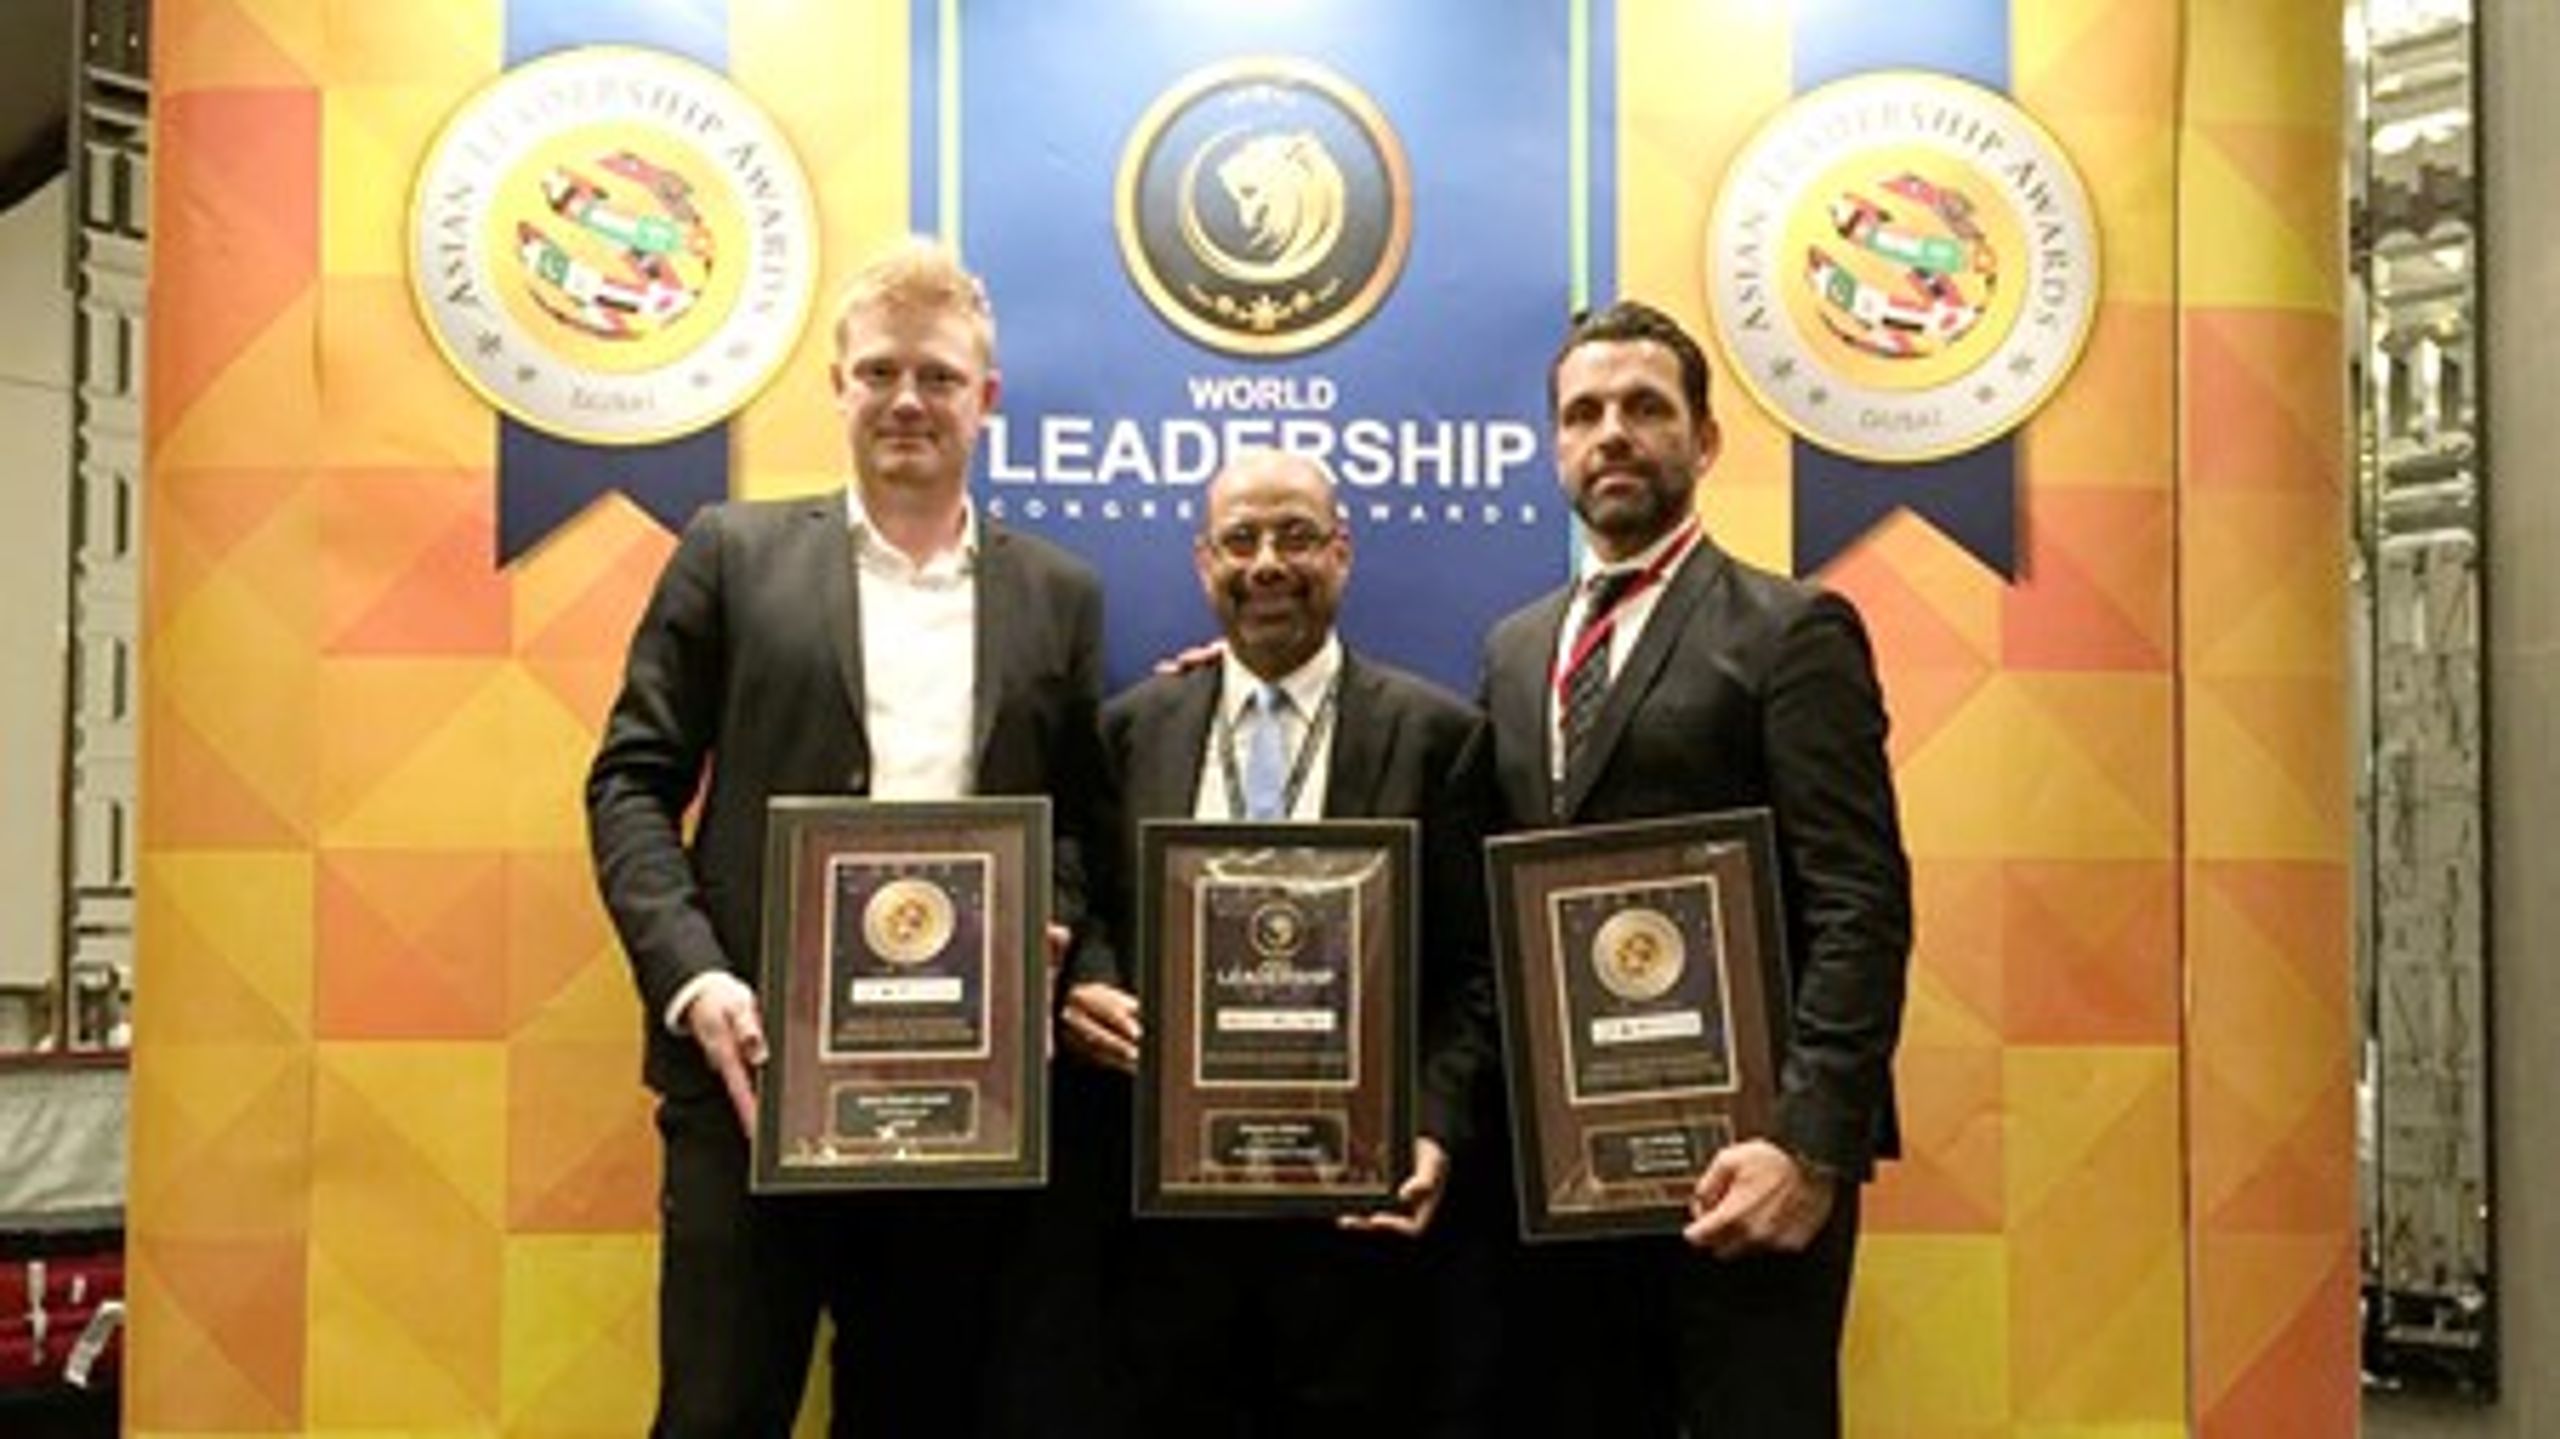 Jim Latrache og Søren Svinth Vandel modtager prisen&nbsp;"Award for outstanding contribution to education" på undervisningskonferencen The Asian Education Leadership Award i Dubai.